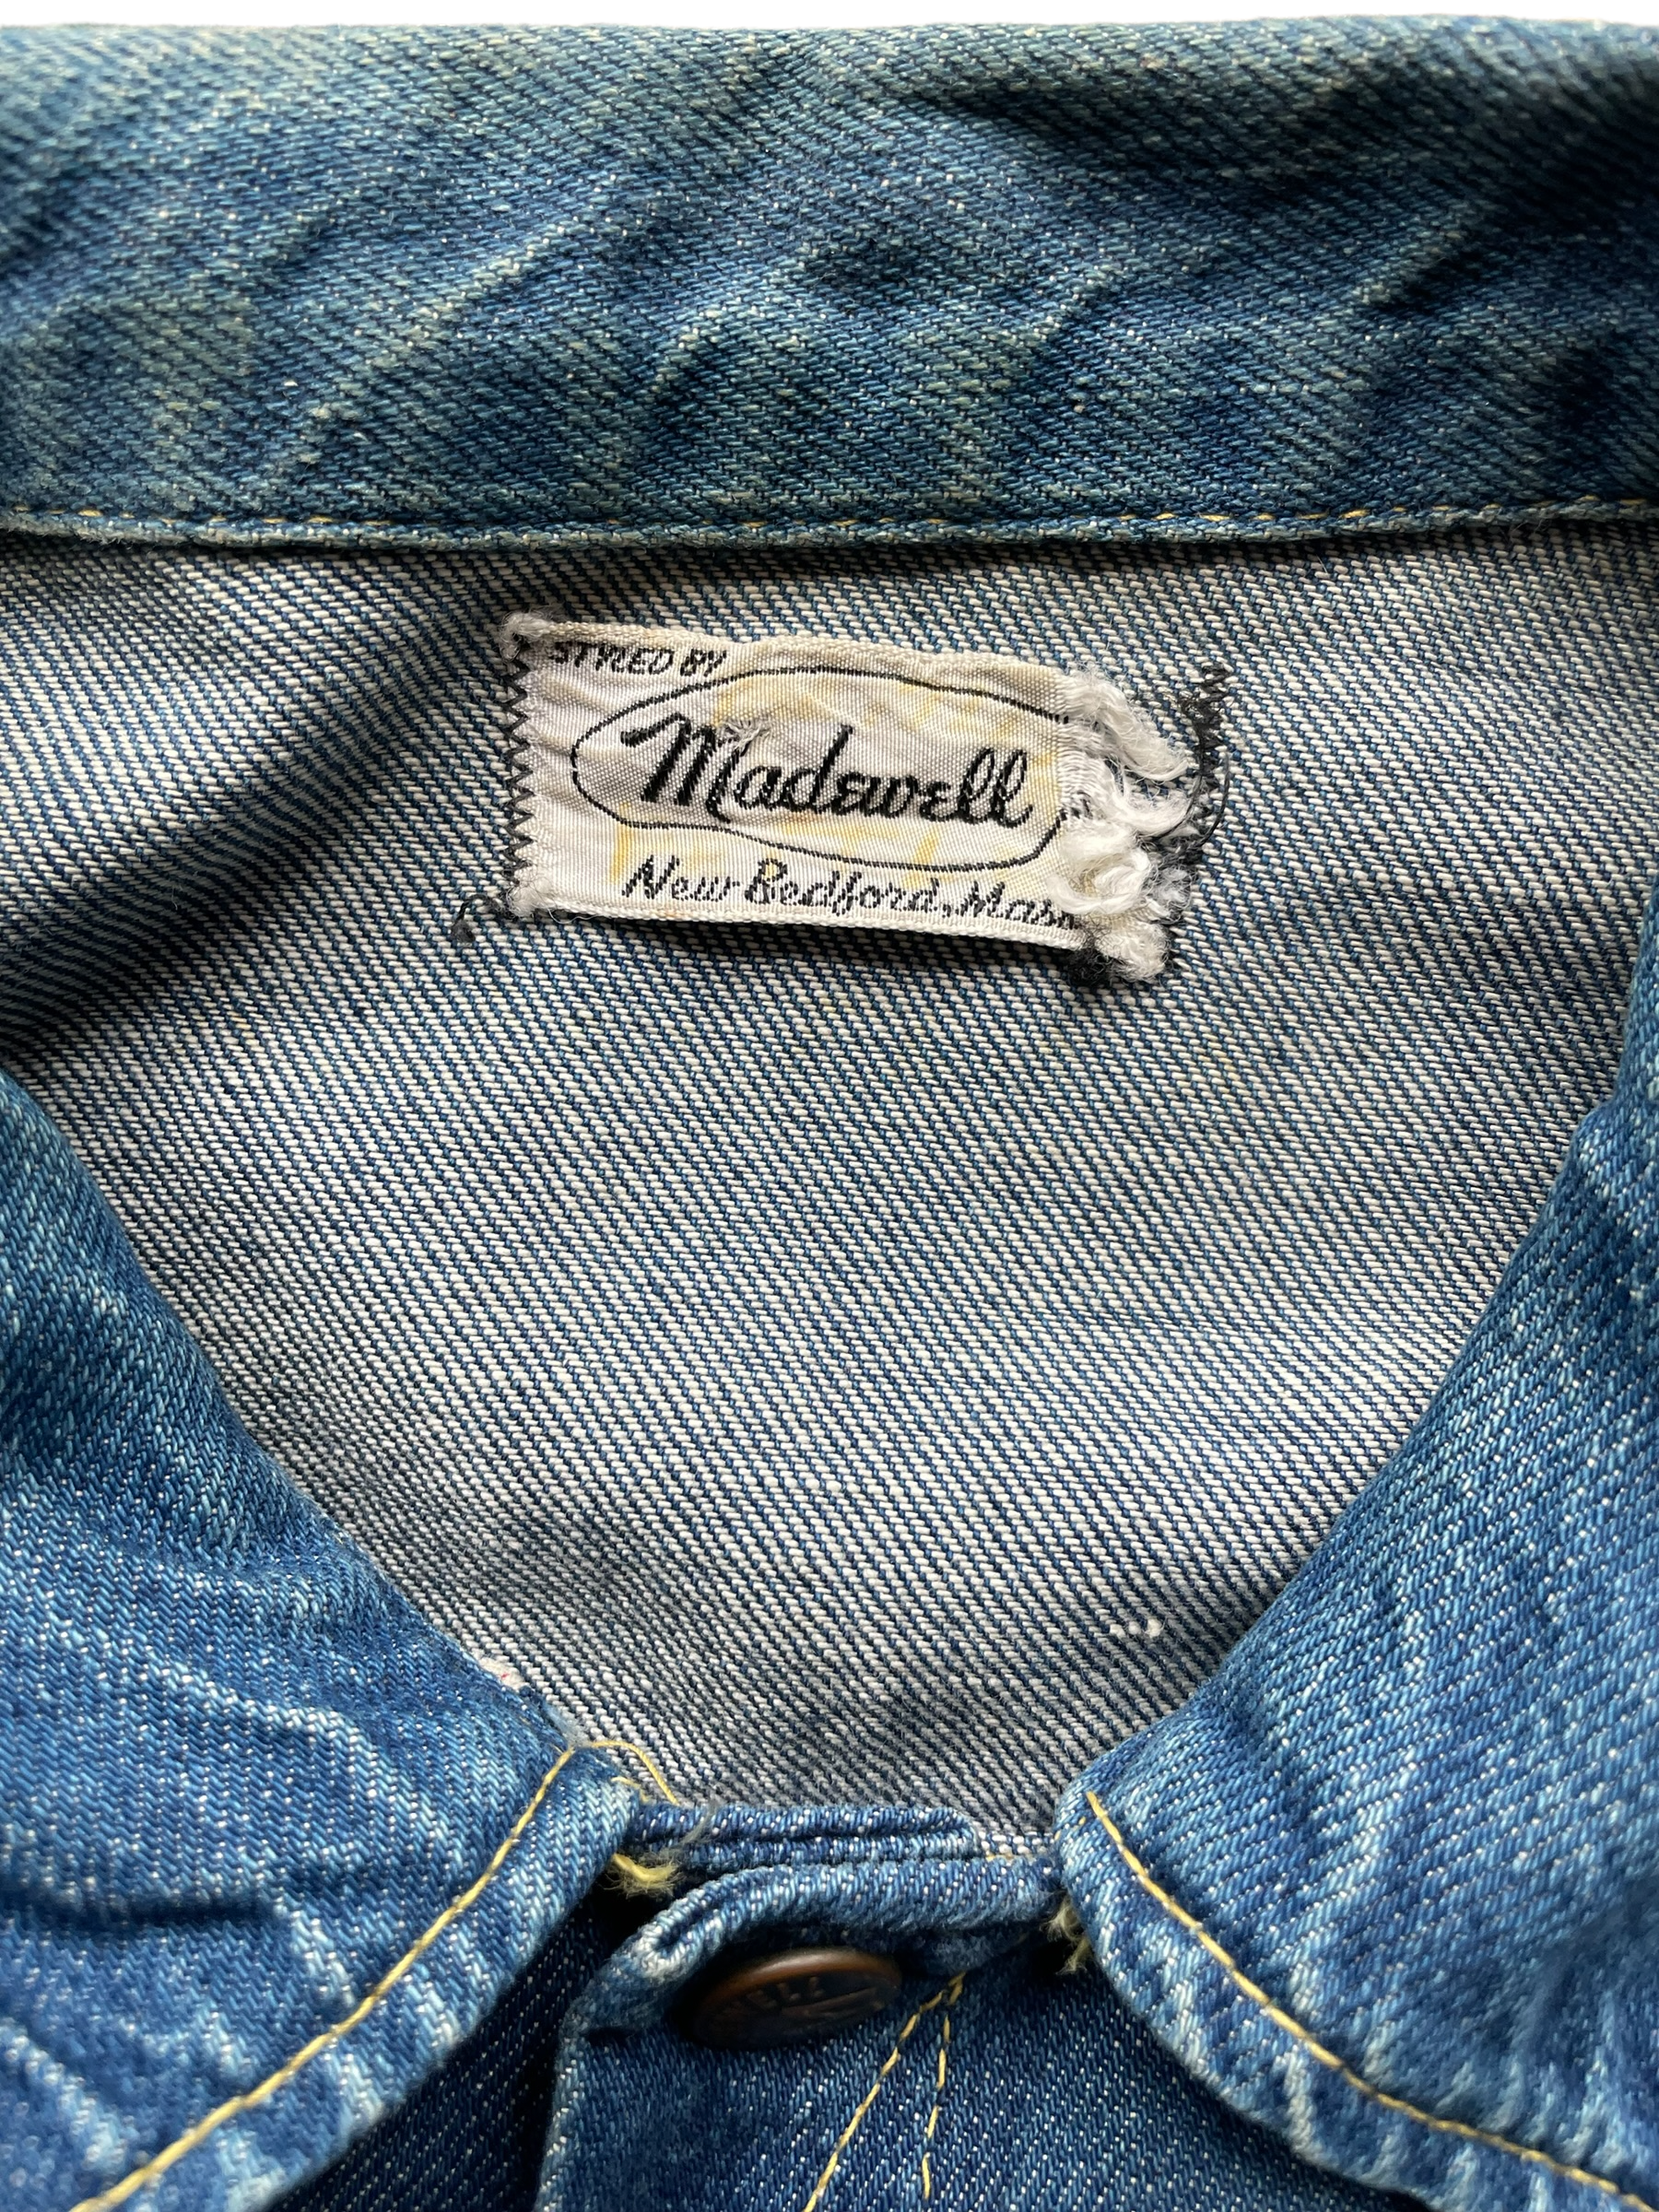 Tag View of Vintage Madewell Selvedge Denim Jacket | Barn Owl Vintage | Seattle Vintage Denim Workwear Clothing